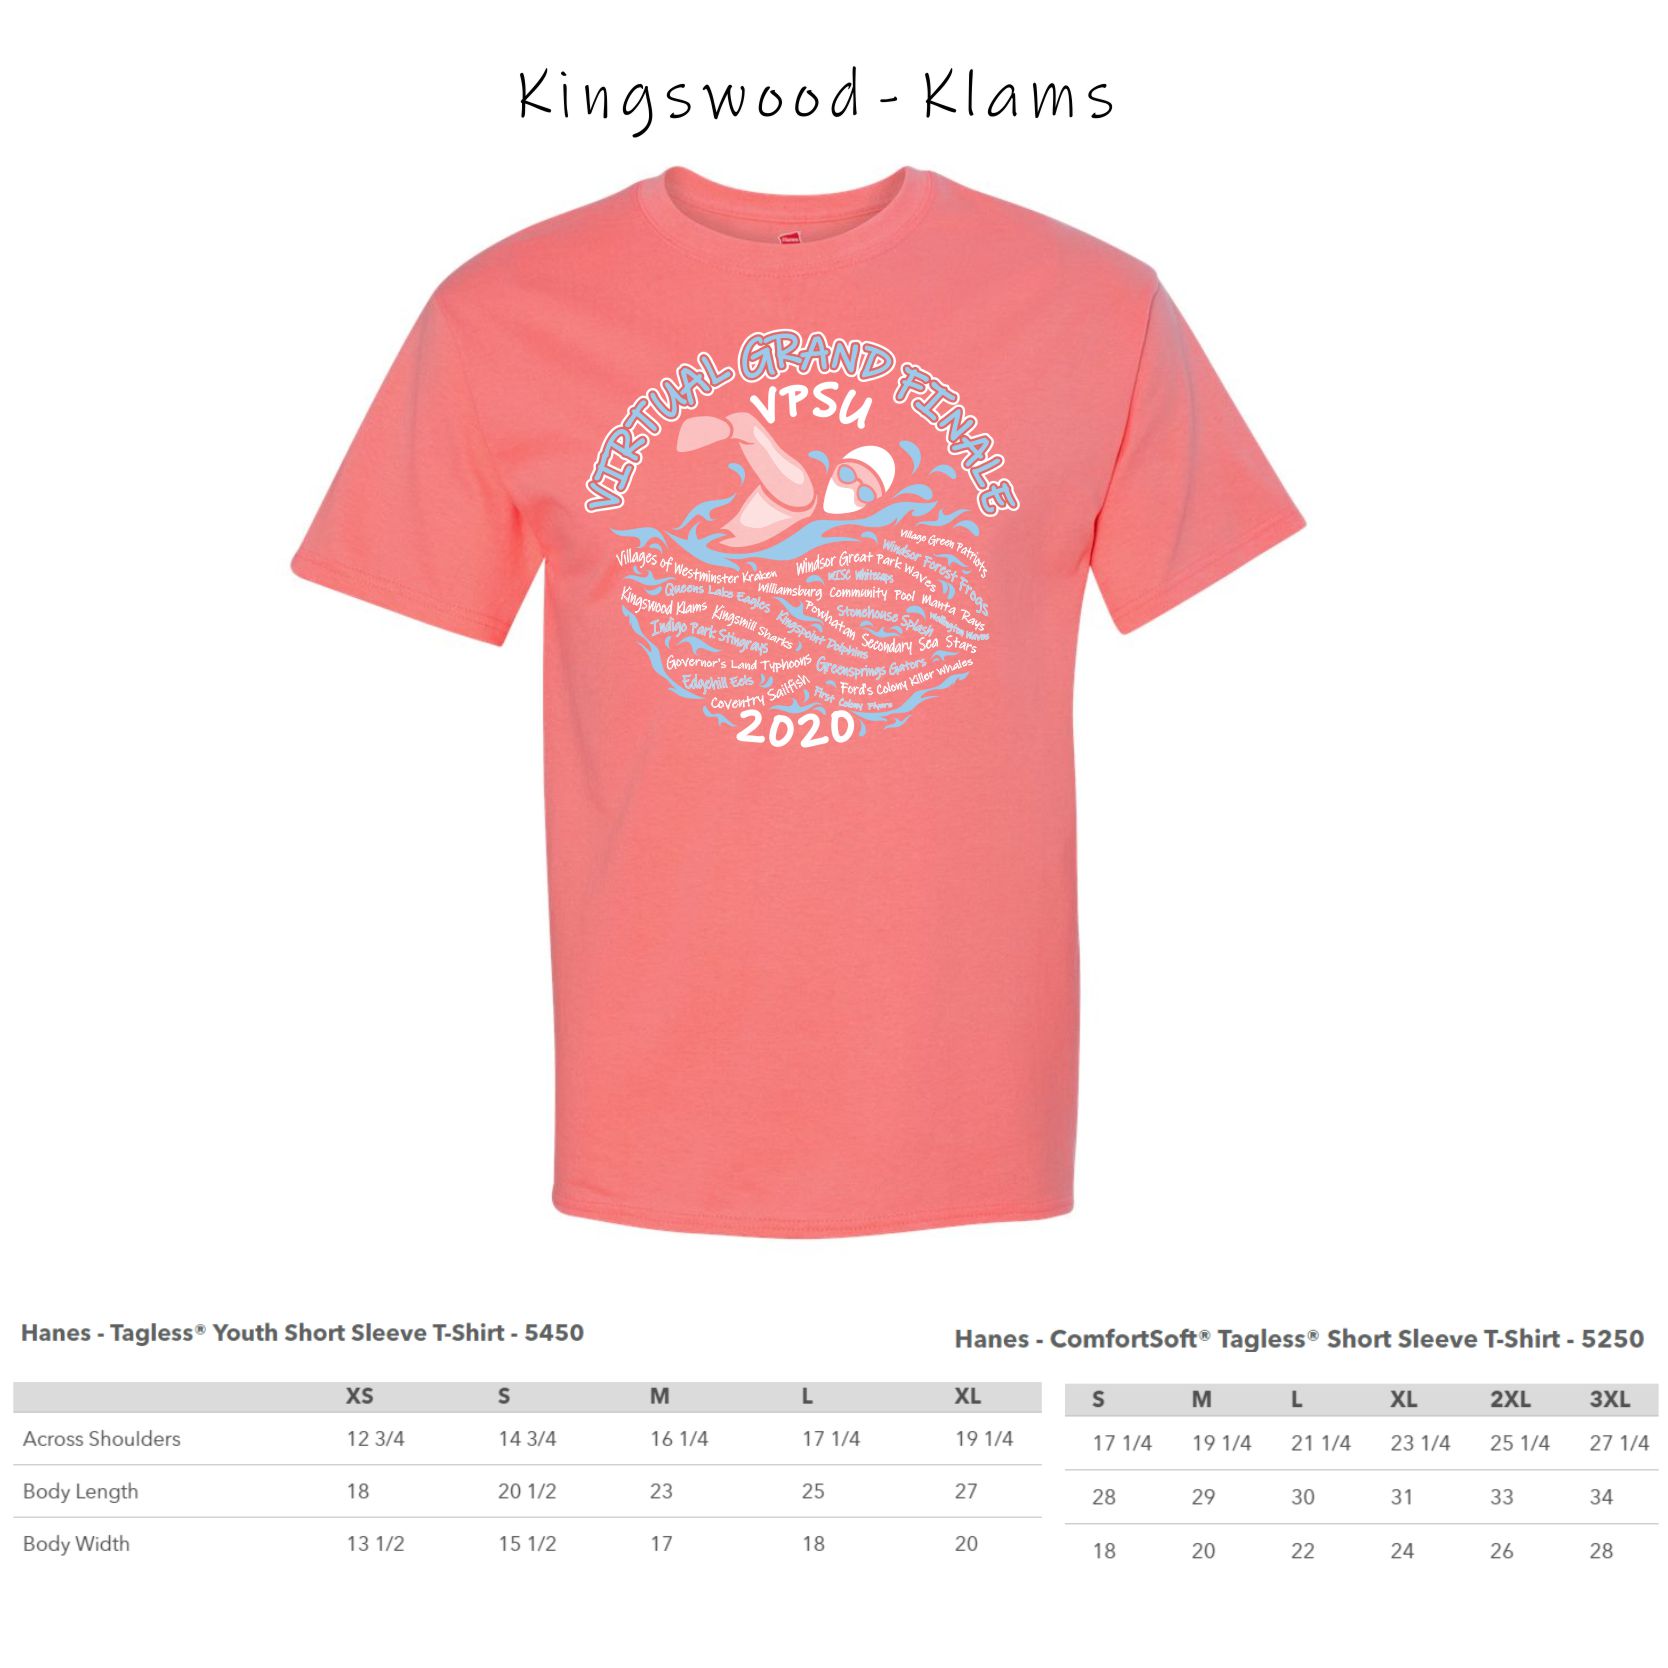 1 - Kingswood Klams